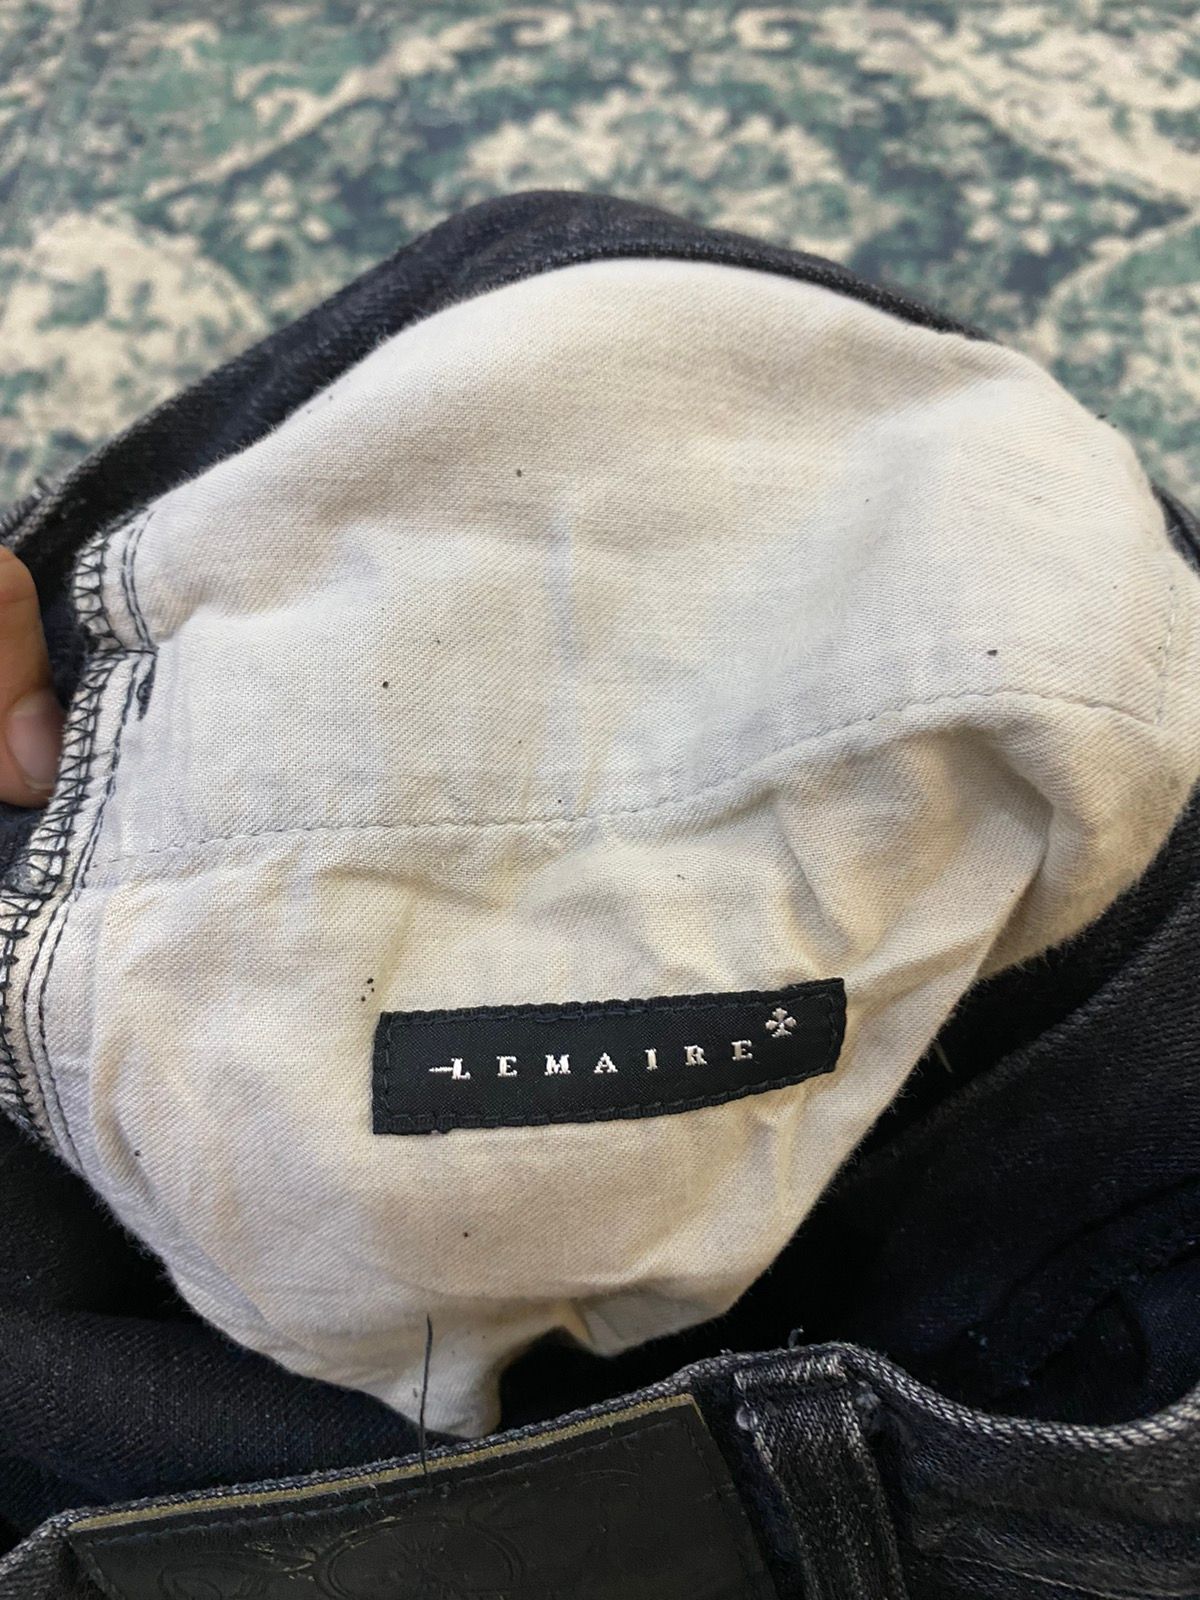 Lemaire Black Leather Lining Pocket Jeans - 8